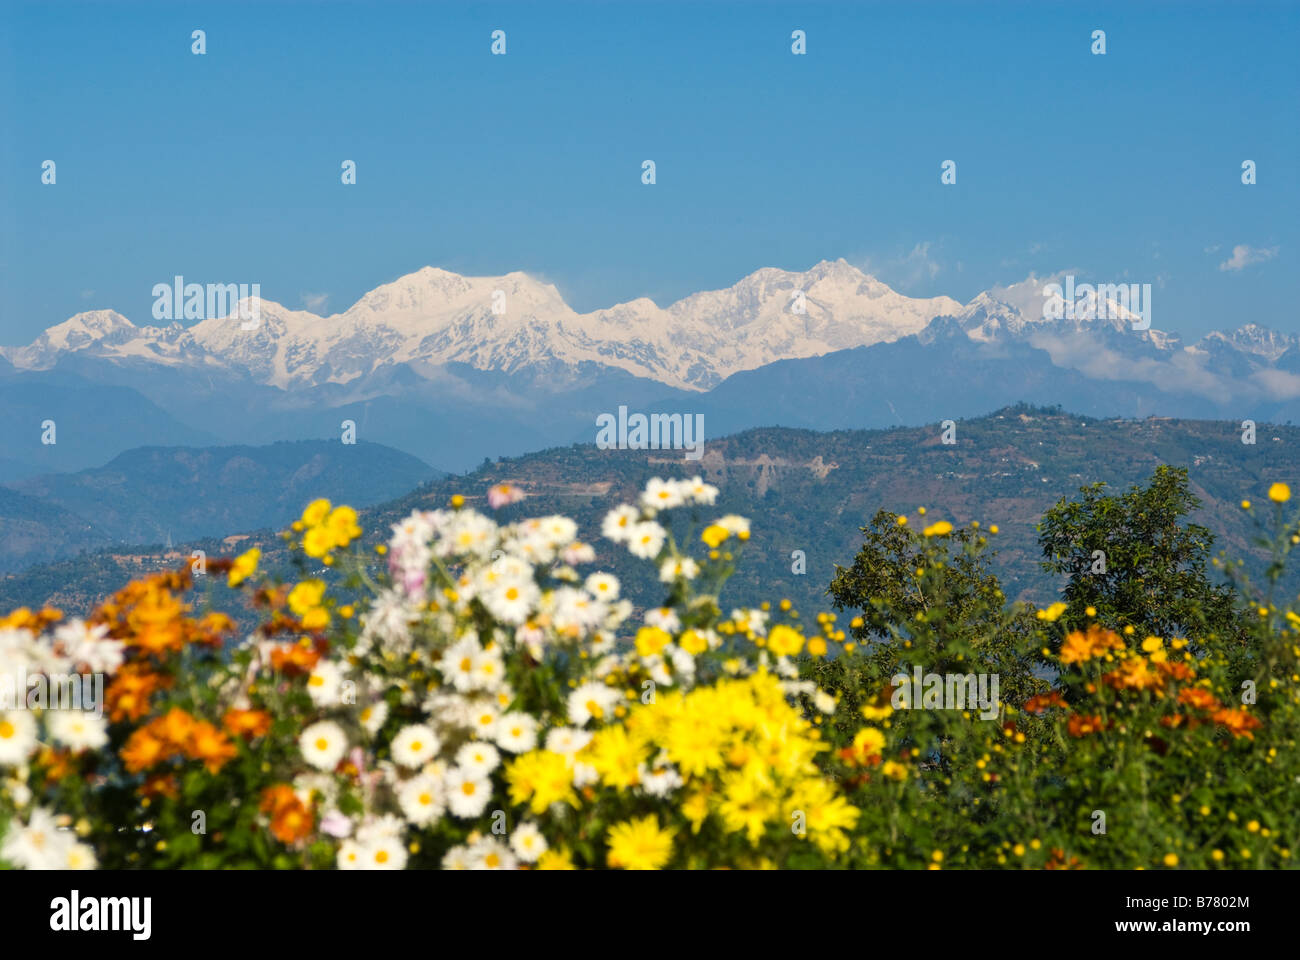 Peaks of the Kangchenjunga mountain range, Sikkim, seen from the terrace at Glenburn Tea Estate, Darjeeling, India. Stock Photo